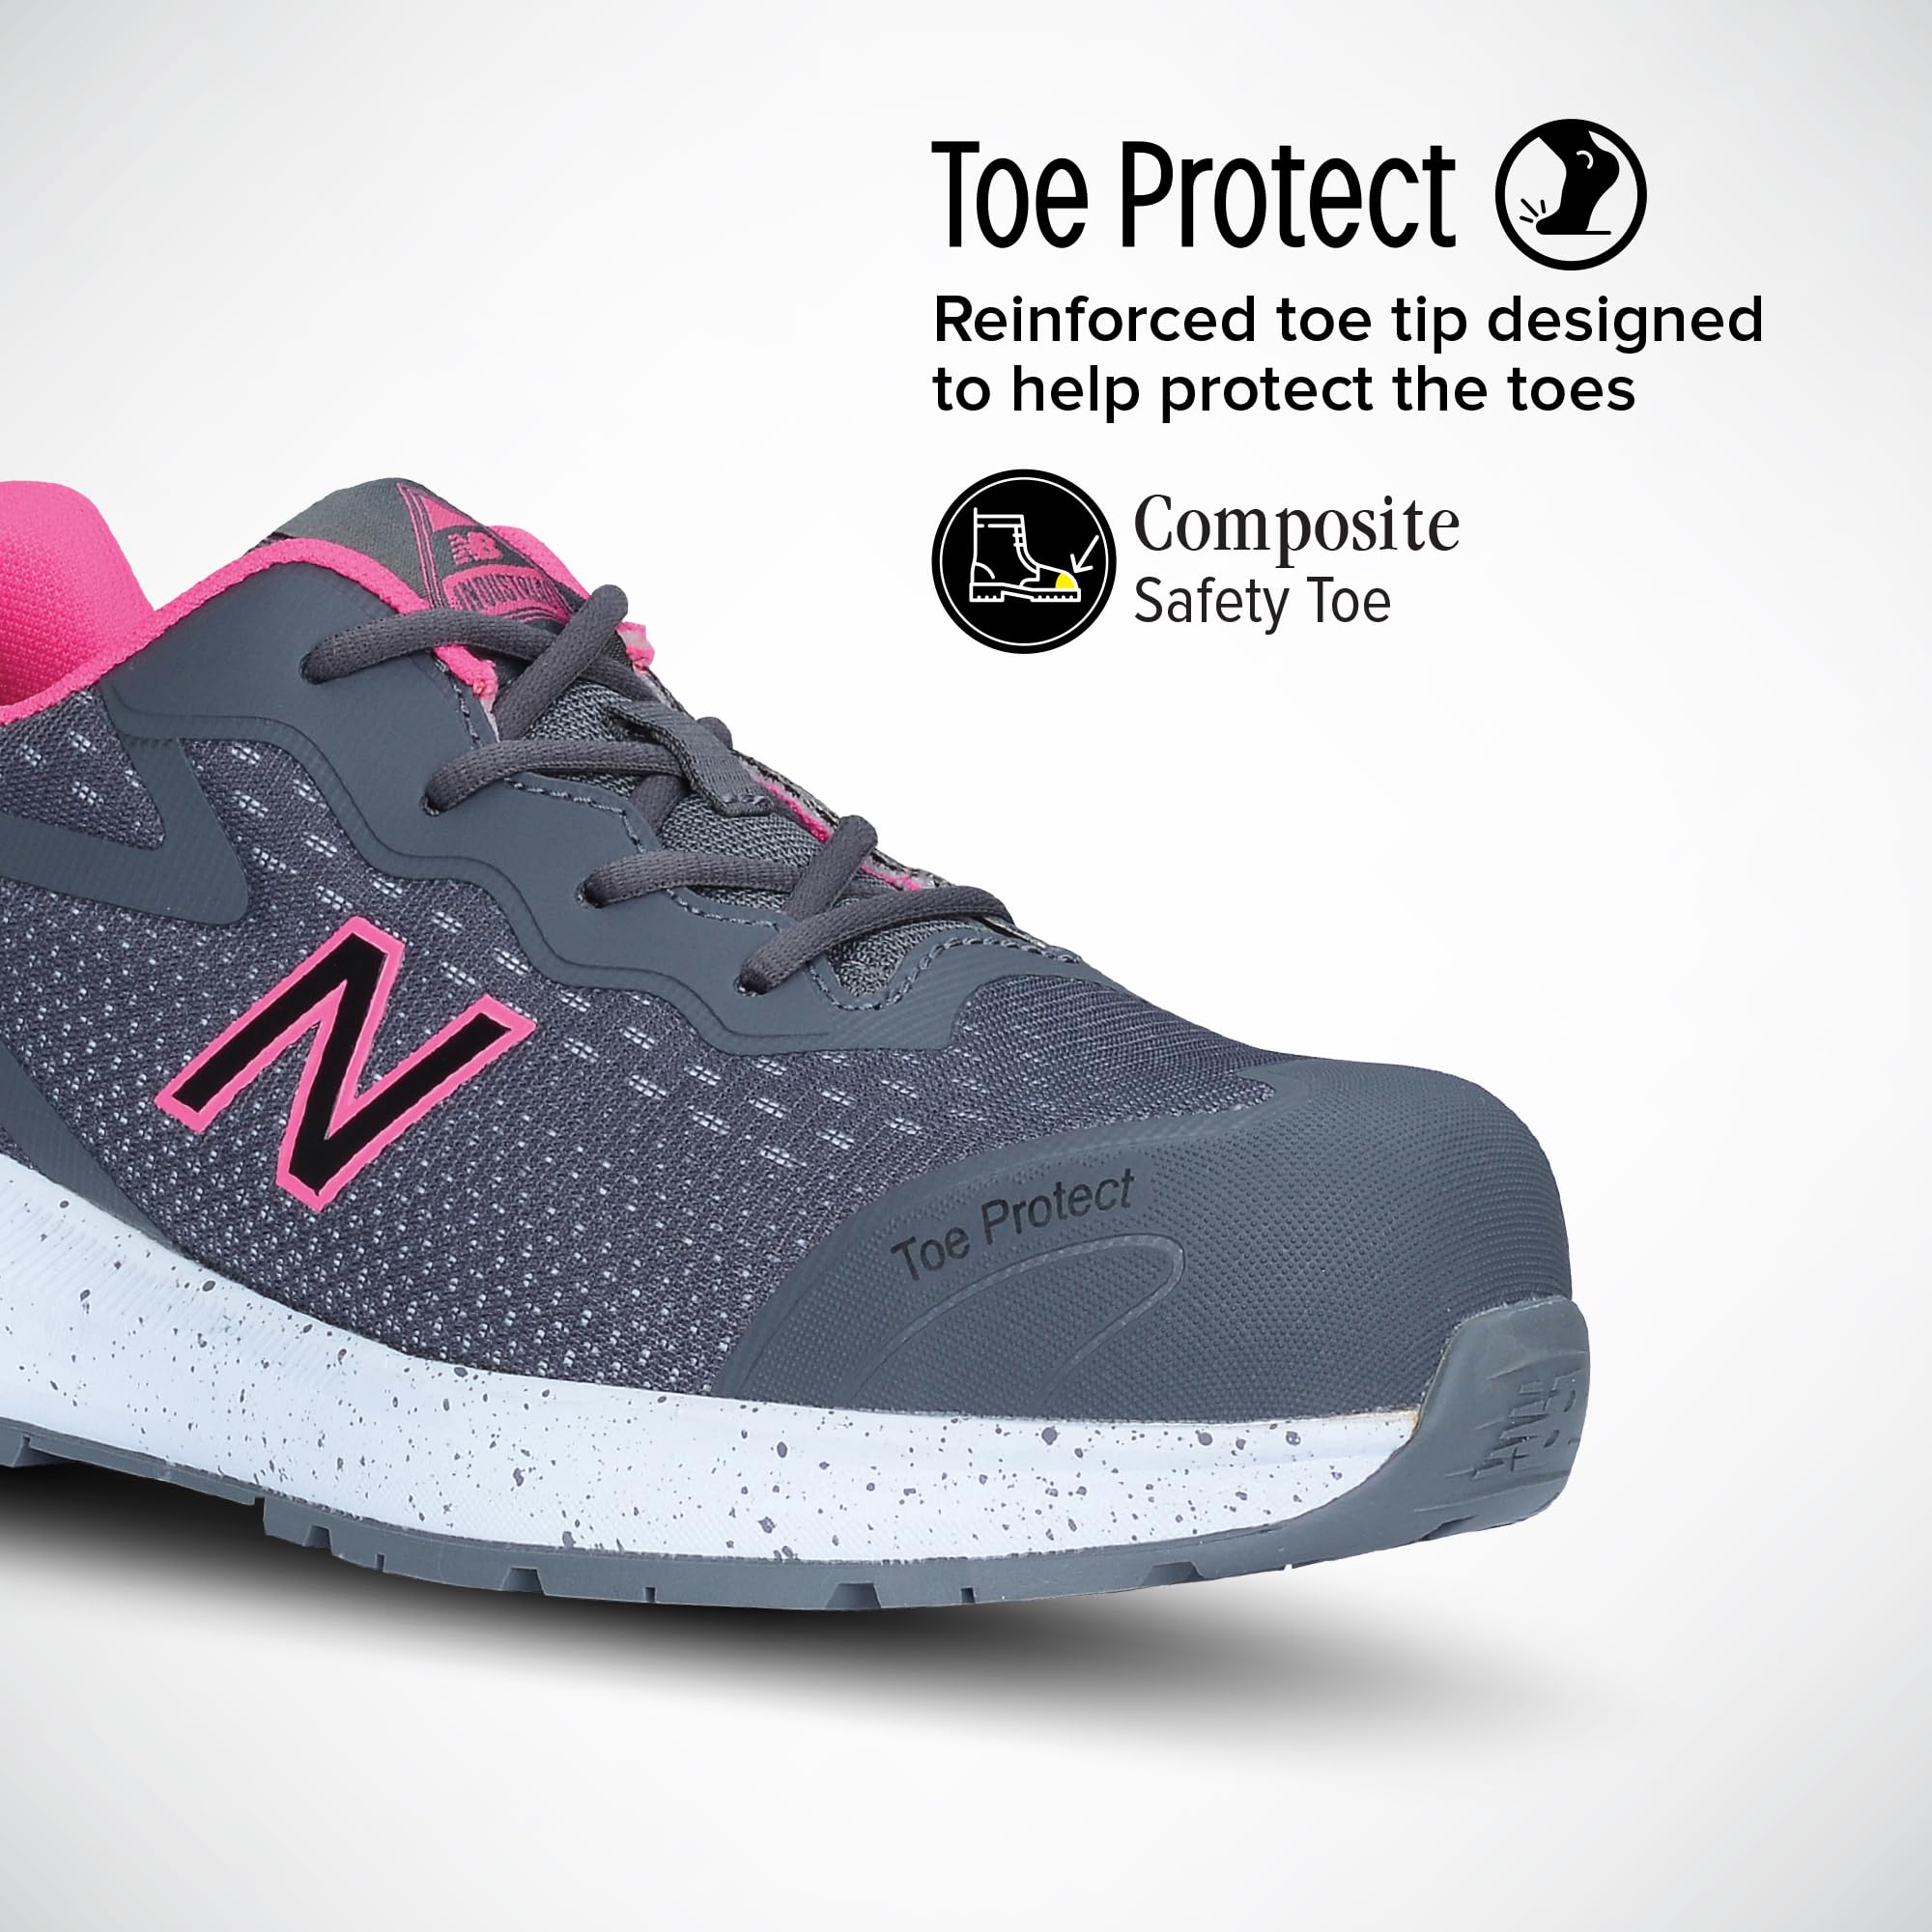 New Balance Women's Logic - Composite Toe, Electric Hazard, Puncture Resistant, Slip Resistant - Grey/Pink - B - 7.5